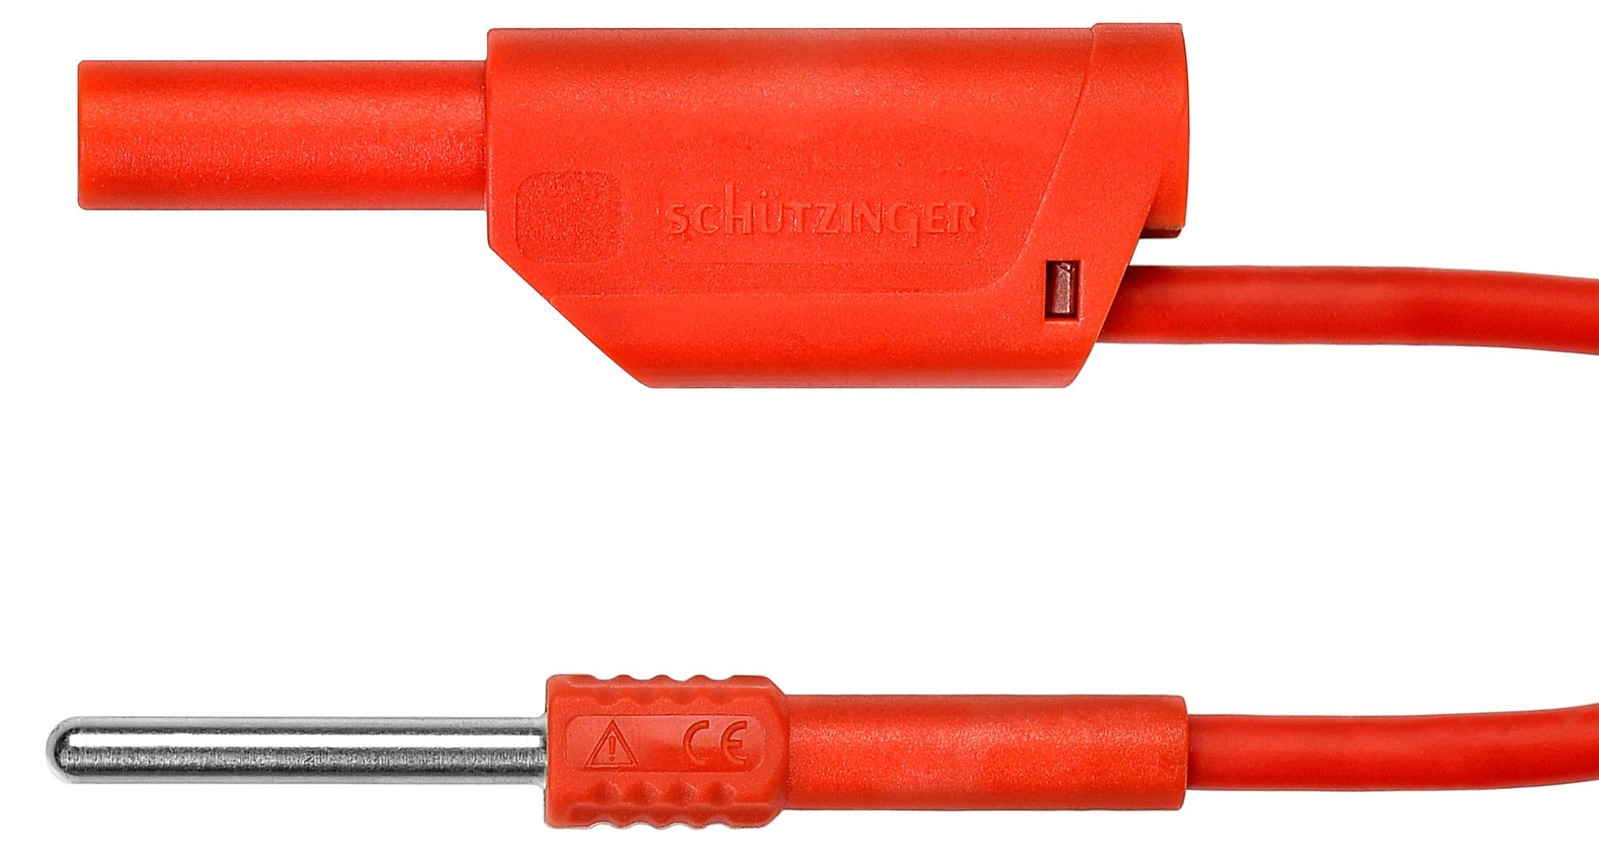 Schutzinger Al 8323 / 1 / 100 / Rt Test Lead, Banana Plug-Pin Tip Plug, 1M